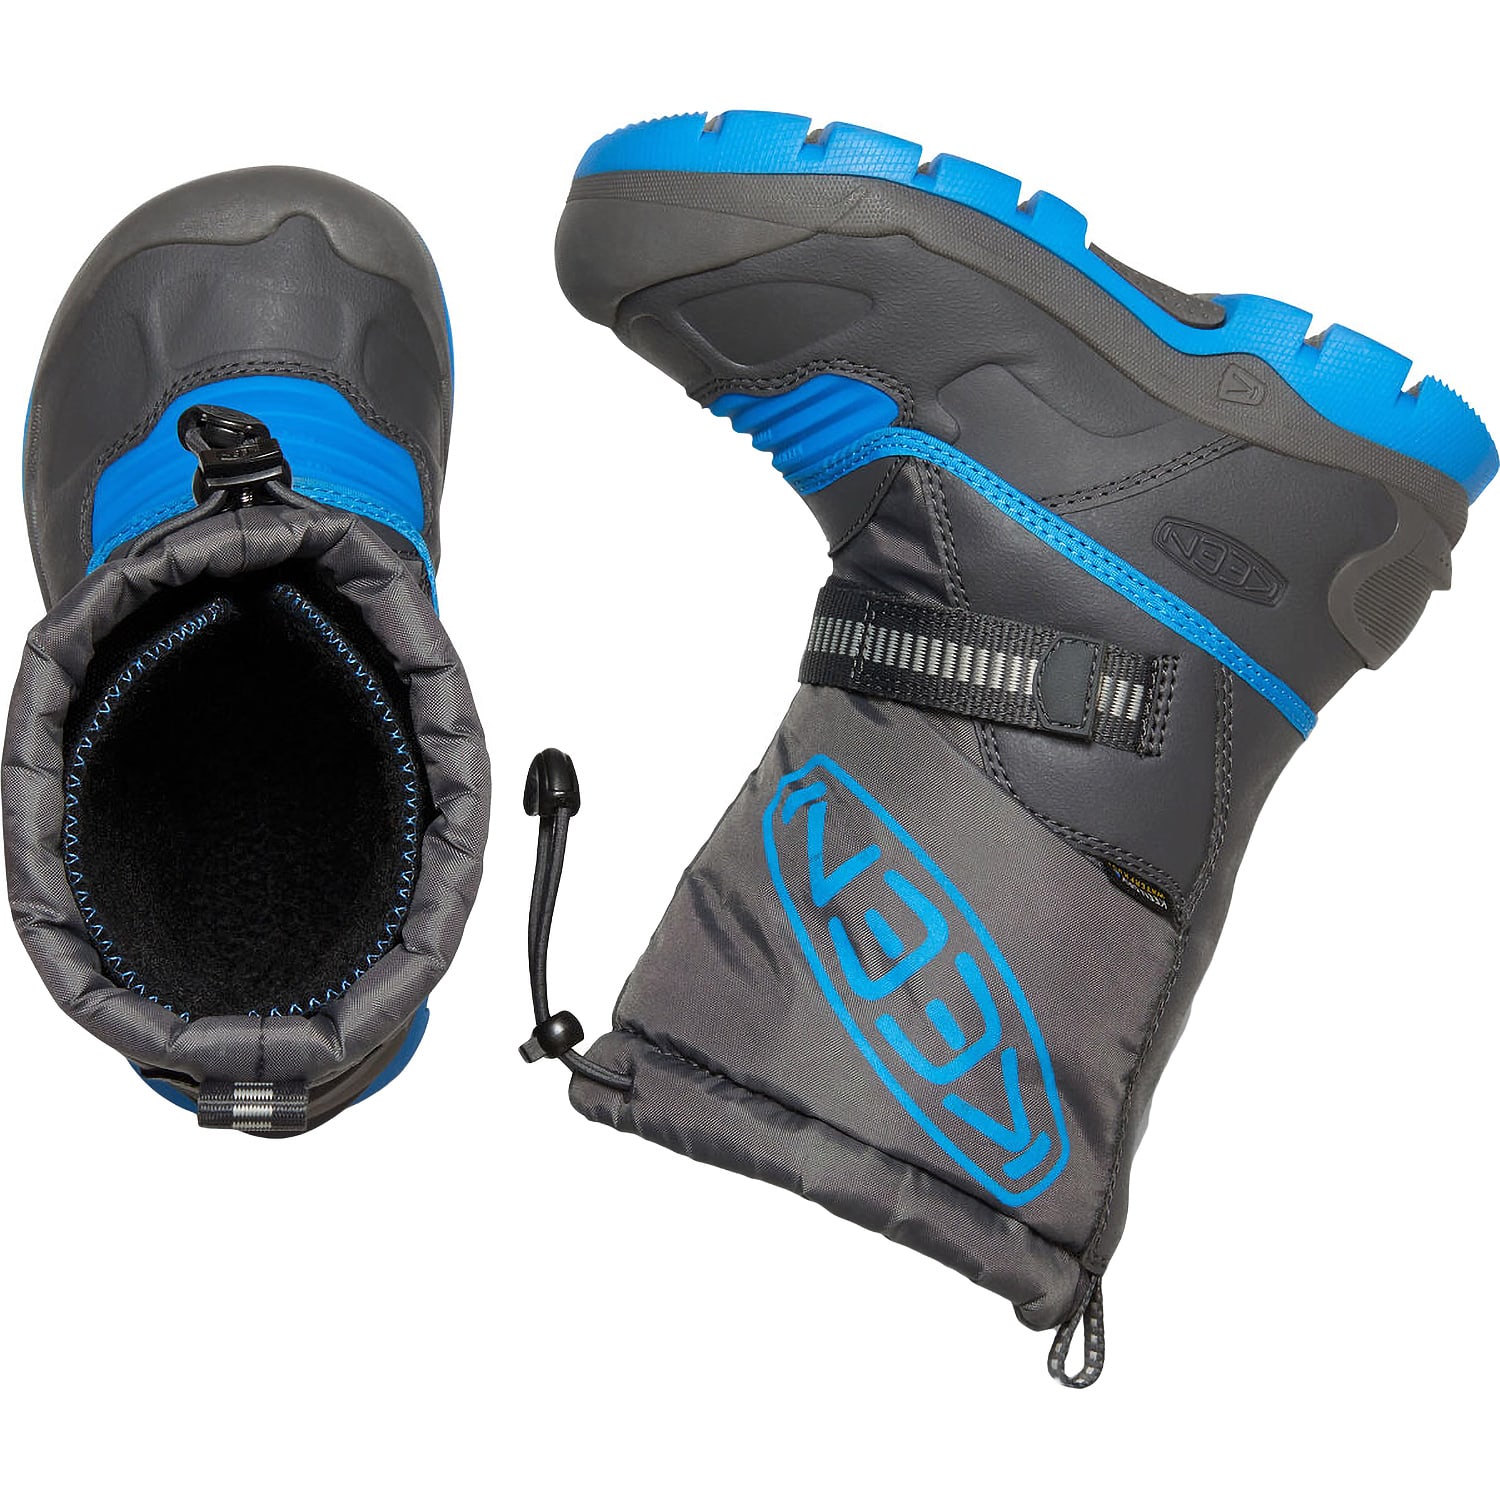 KEEN Youth Snow Troll Waterproof Boots